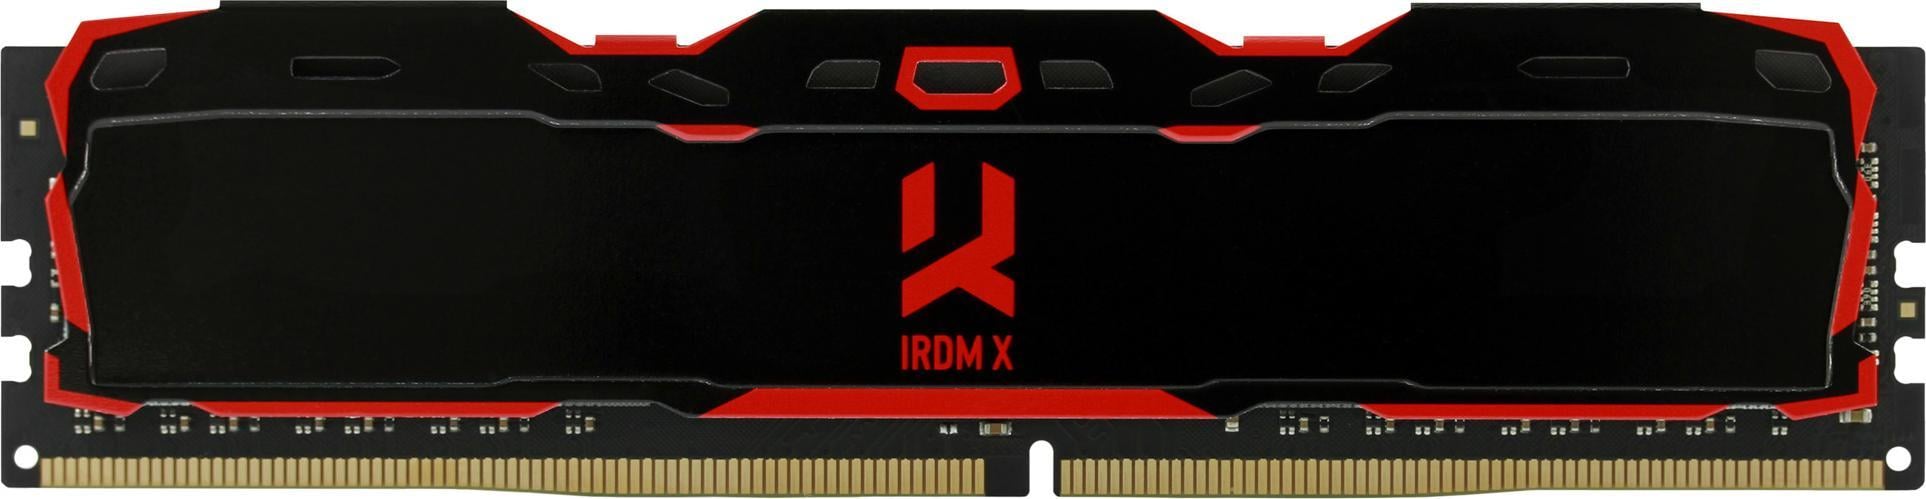 Memorii - Memorie RAM Goodram IRDM X Black, 8GB, DDR4, 2666MHz, CL16